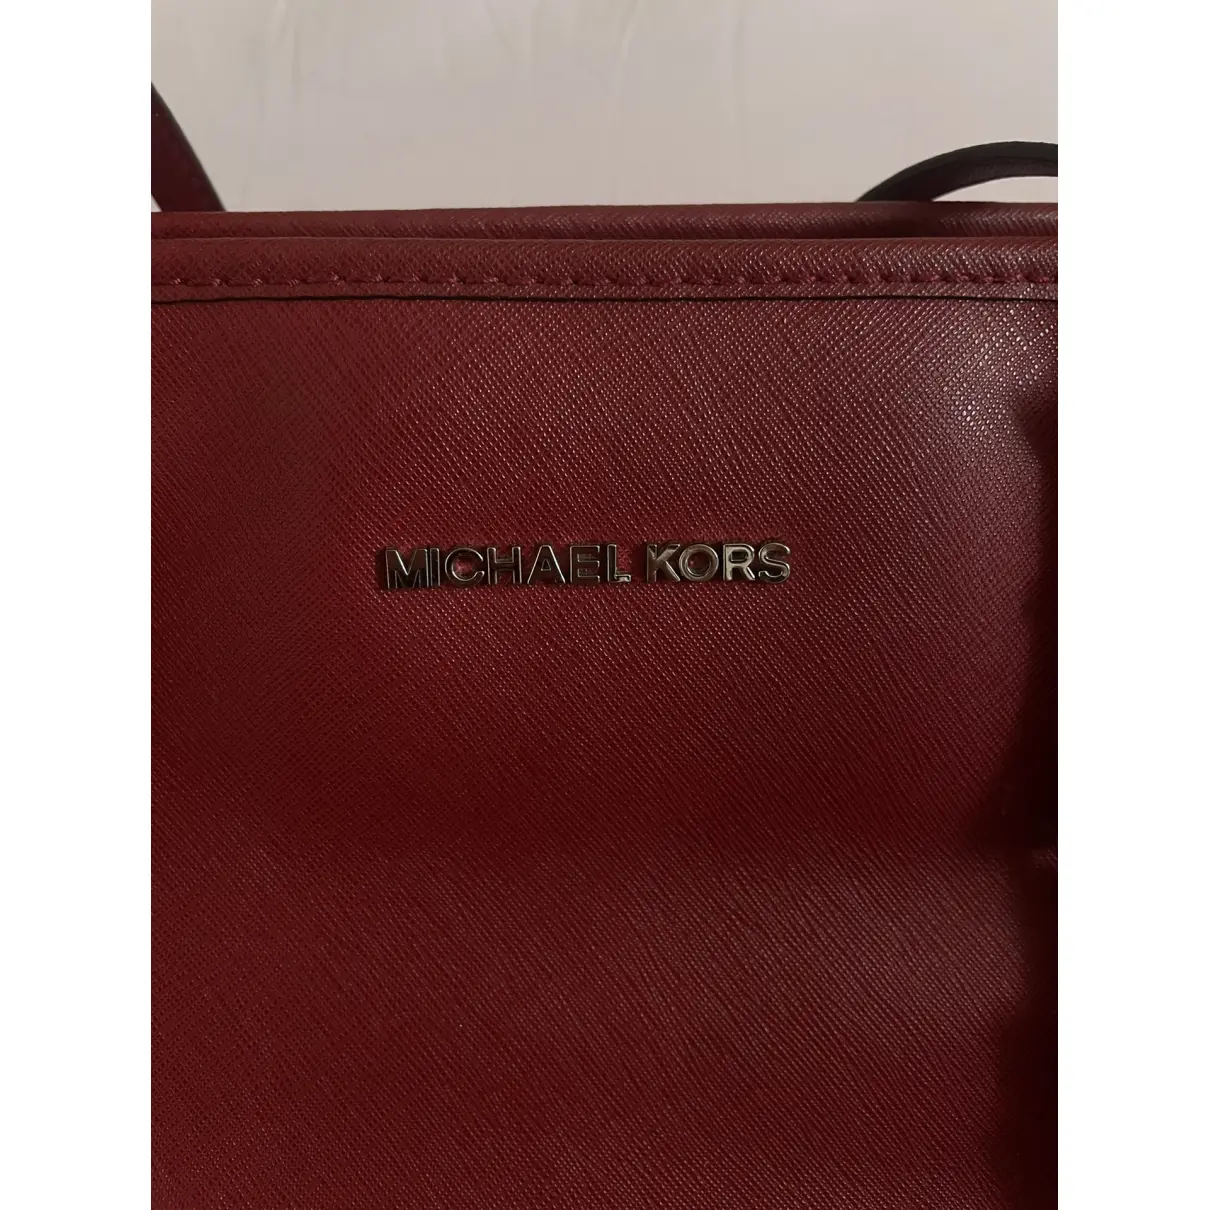 Buy Michael Kors Jet Set leather handbag online